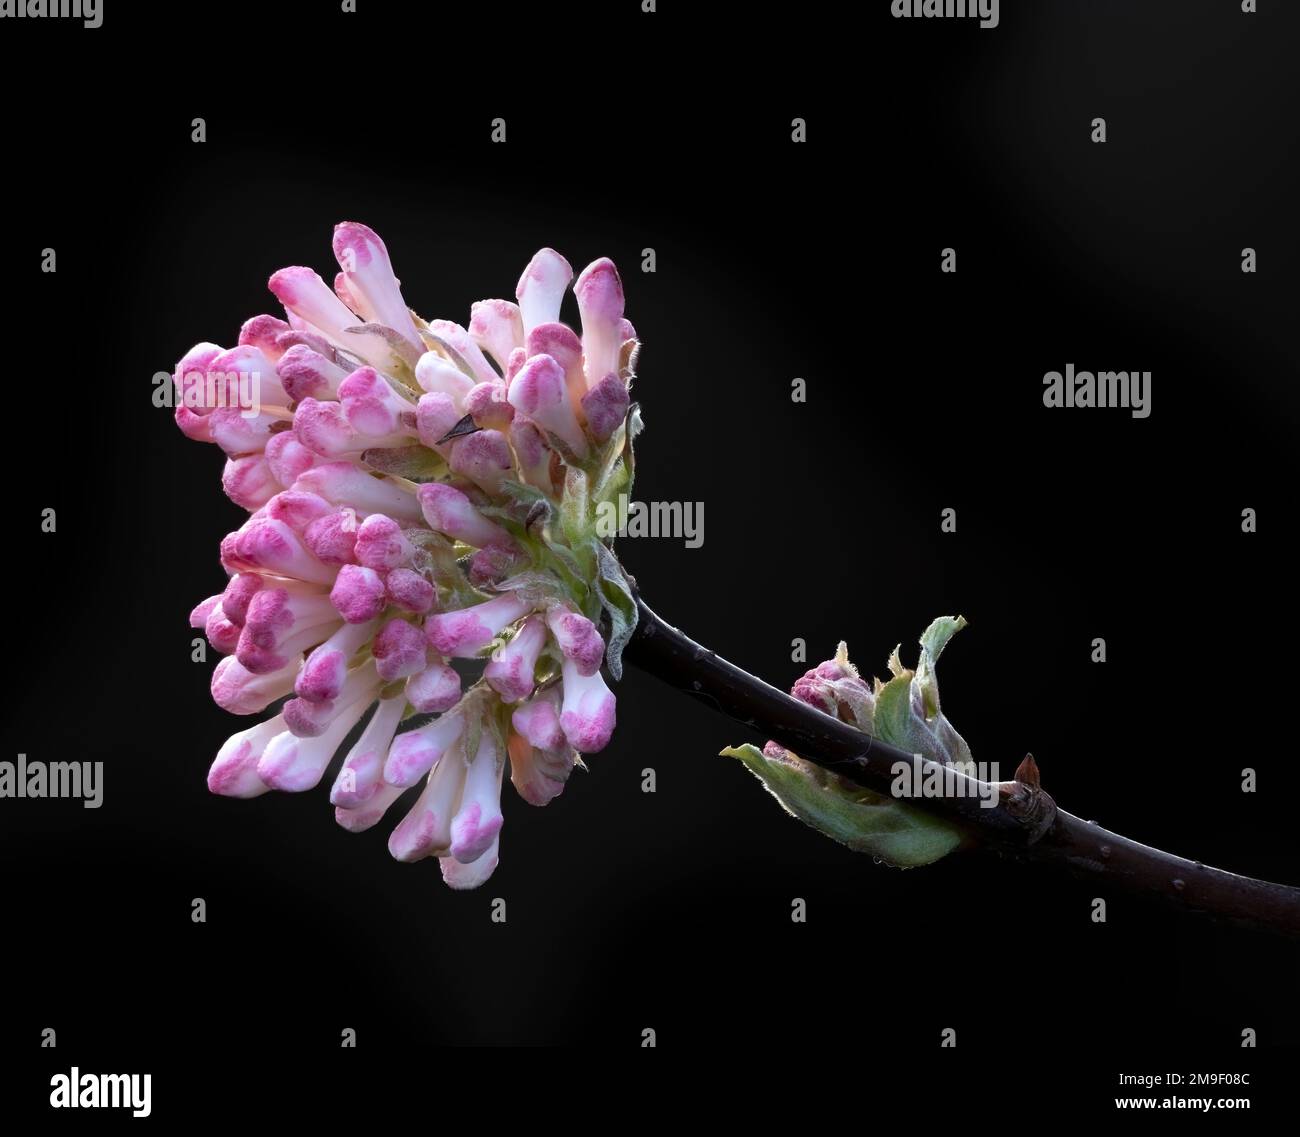 Closeup of Flower buds of Viburnum x bodnantense 'Charles Lamont' against a dark background Stock Photo